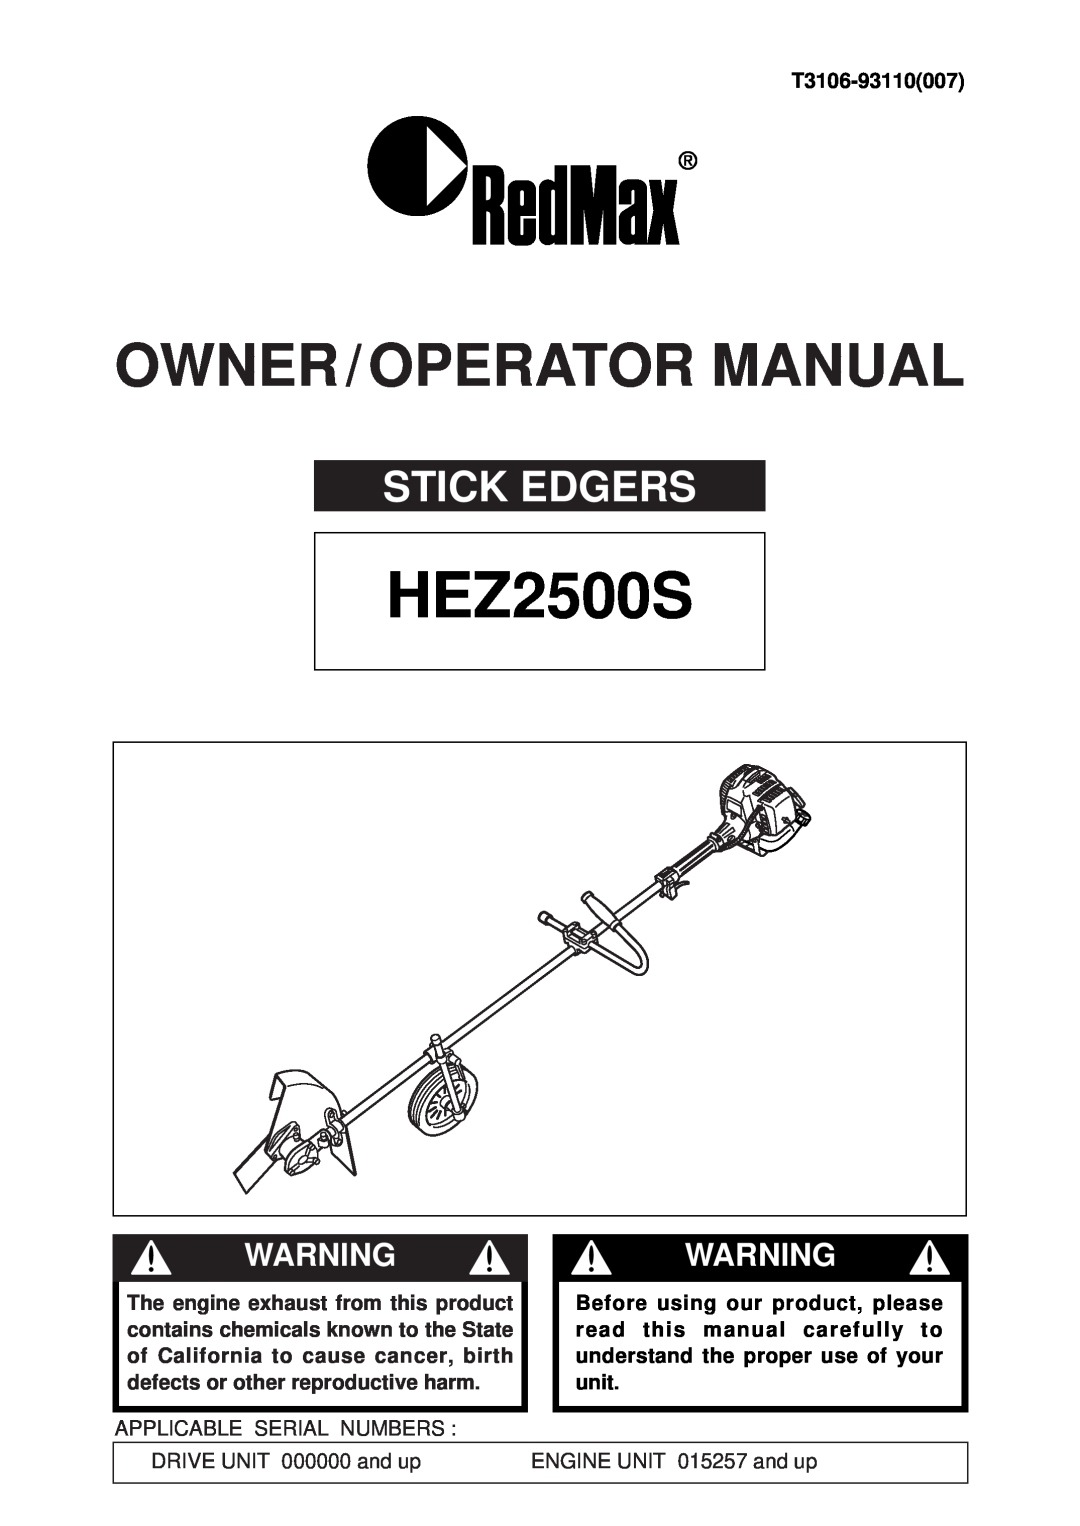 RedMax HEZ2500S manual Stick Edgers, Owner / Operator Manual, Warning Warning 